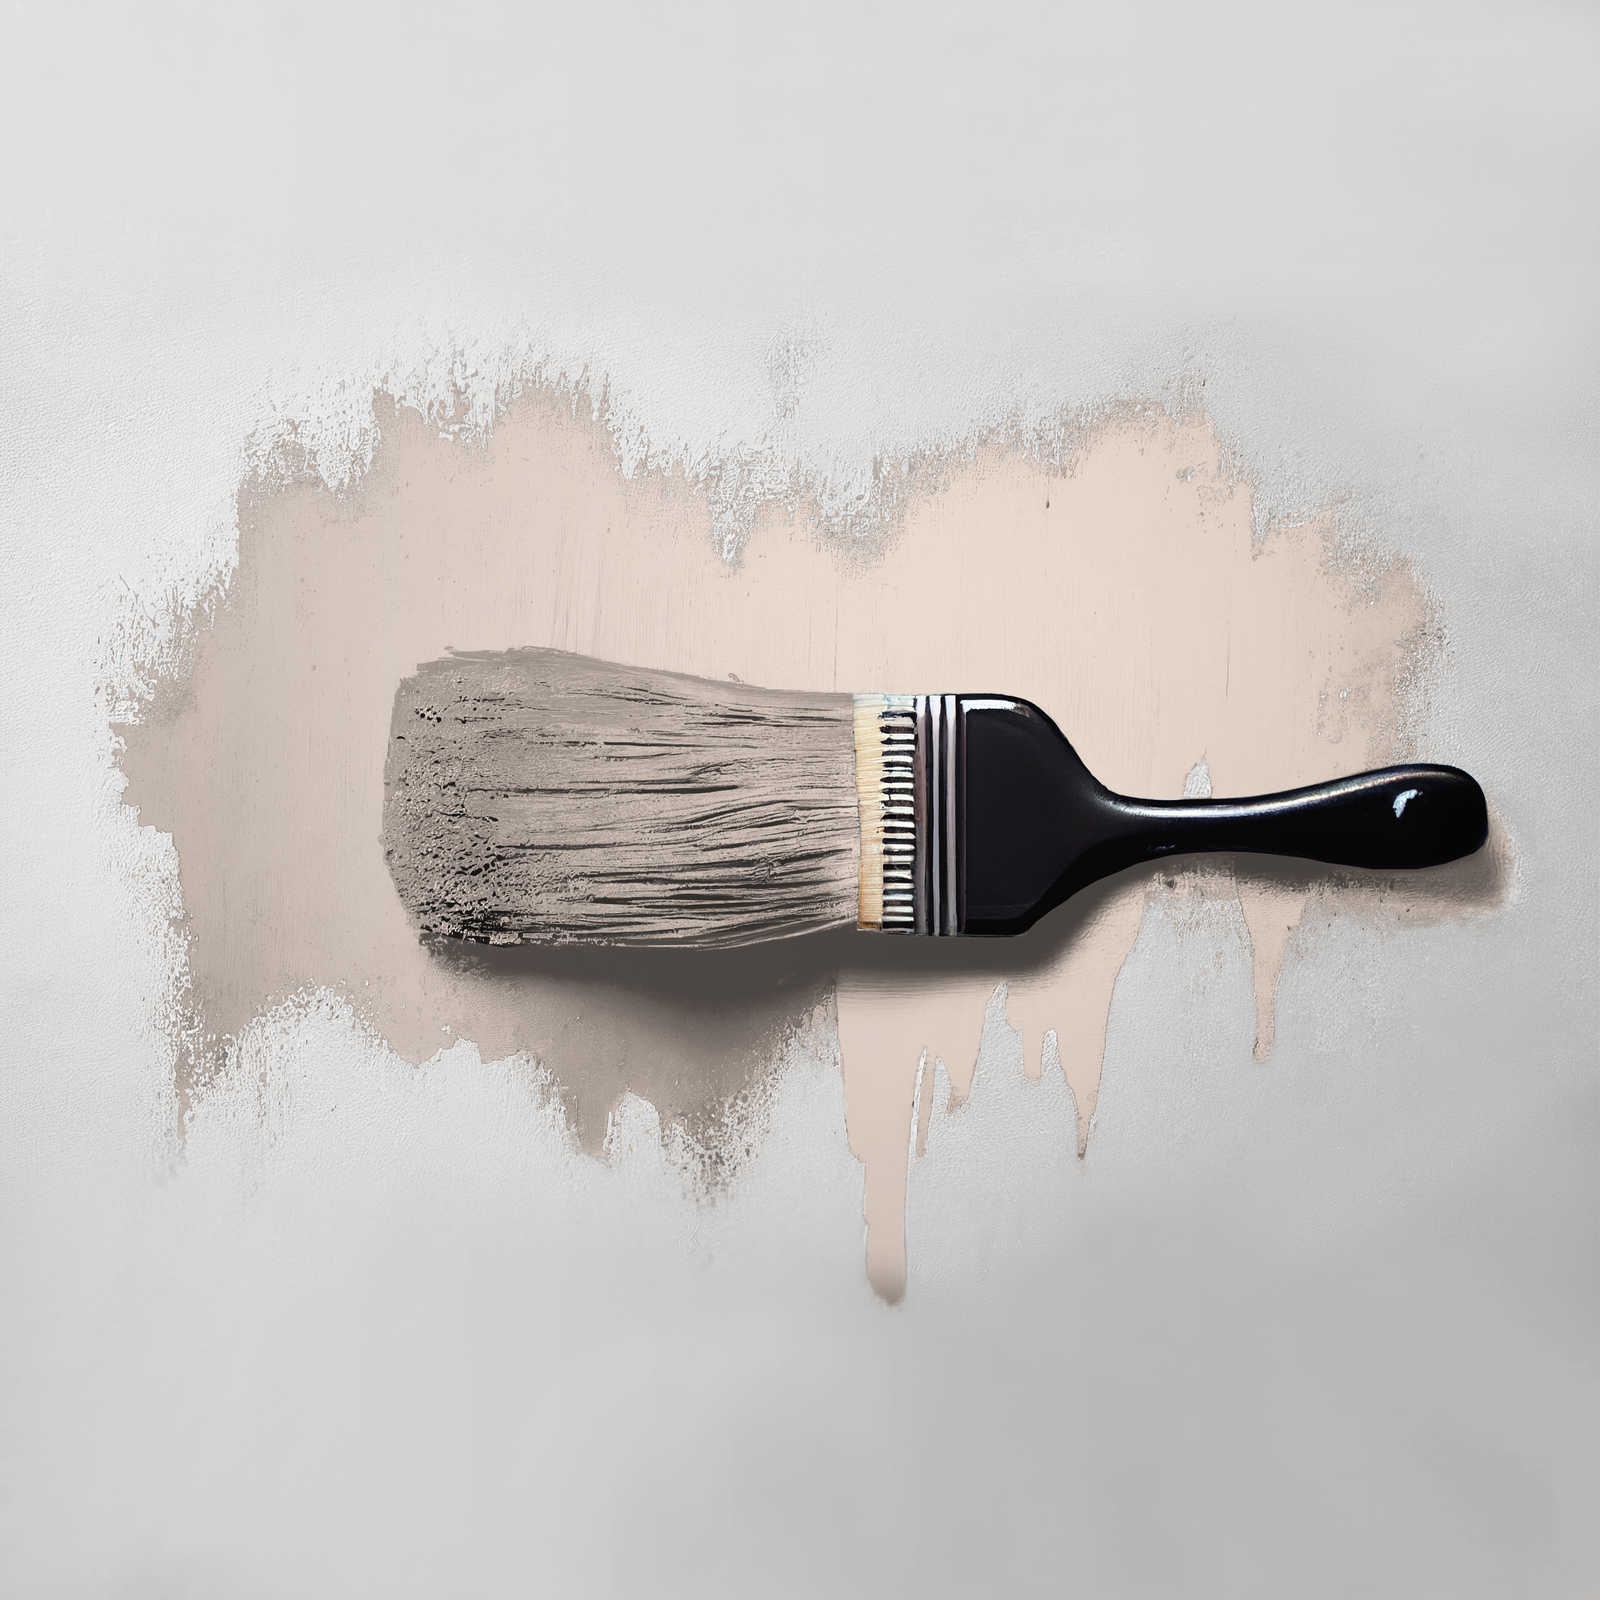             Pintura mural TCK7000 »Himalaya Salt« en precioso beige – 2,5 litro
        